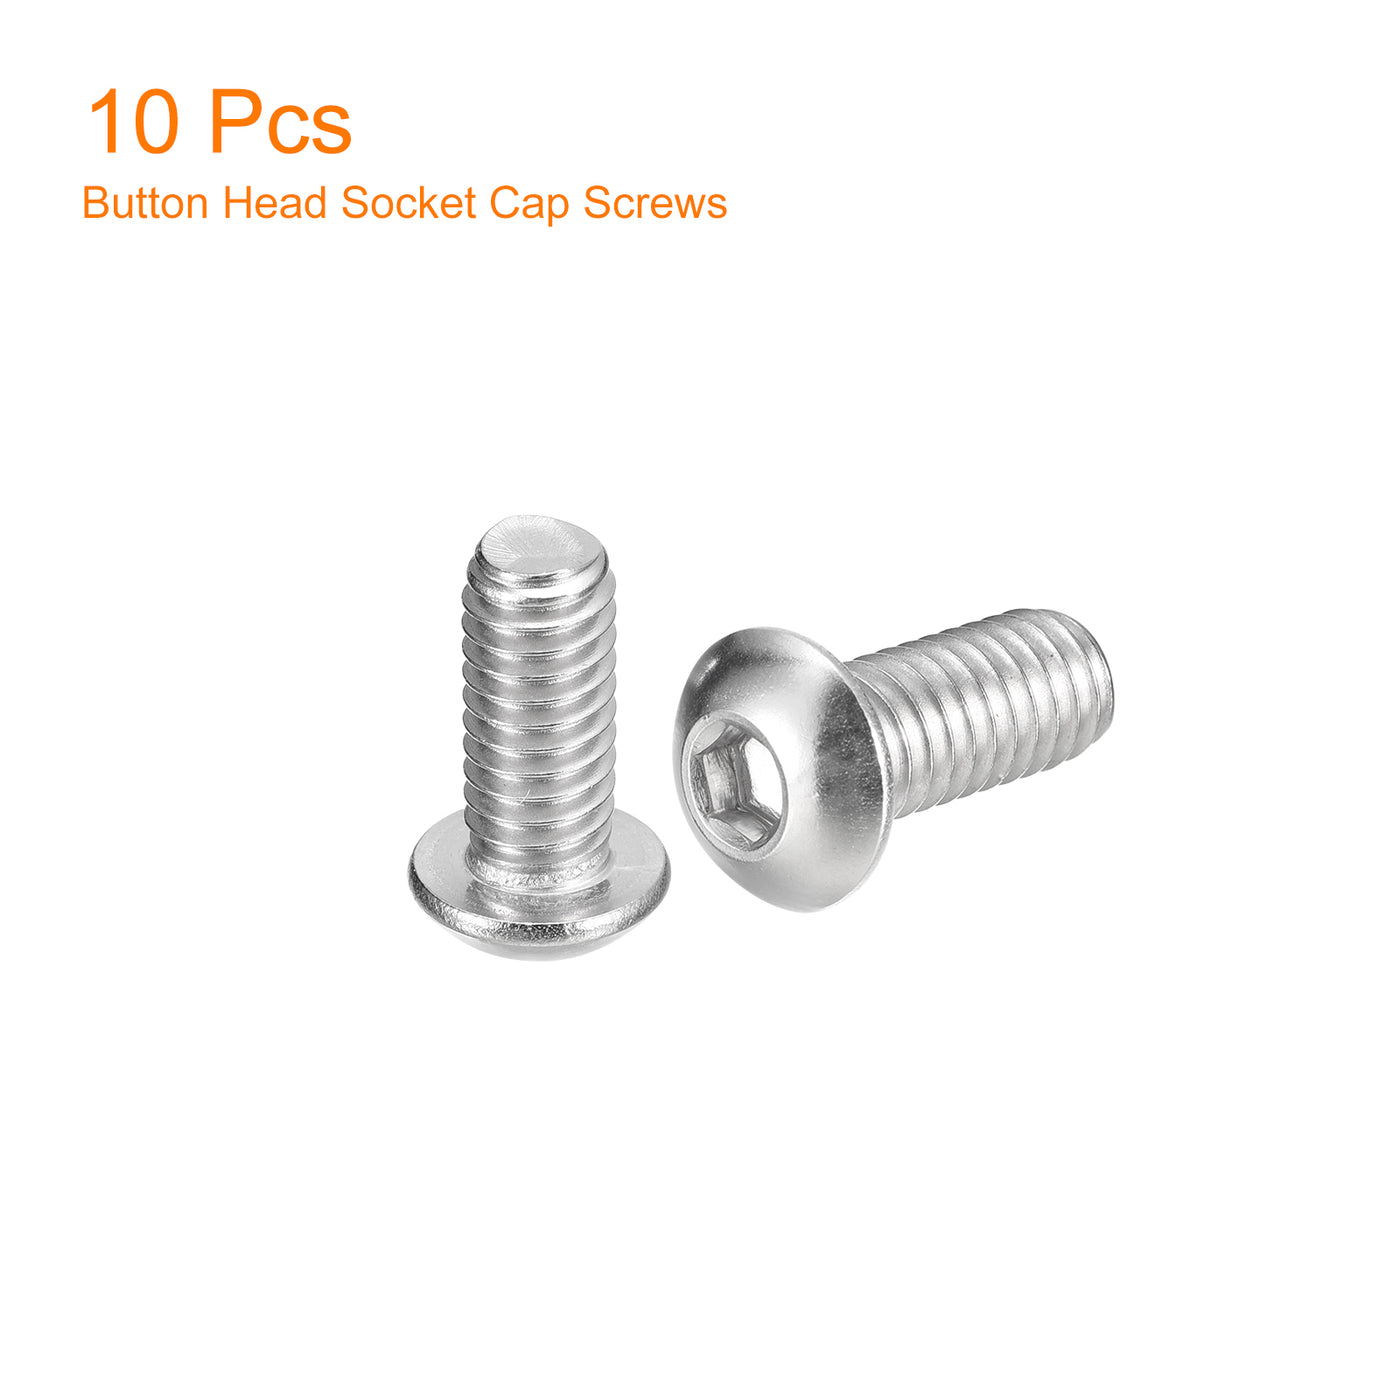 uxcell Uxcell 5/16-18x3/4" Button Head Socket Cap Screws, 10pcs 304 Stainless Steel Screws